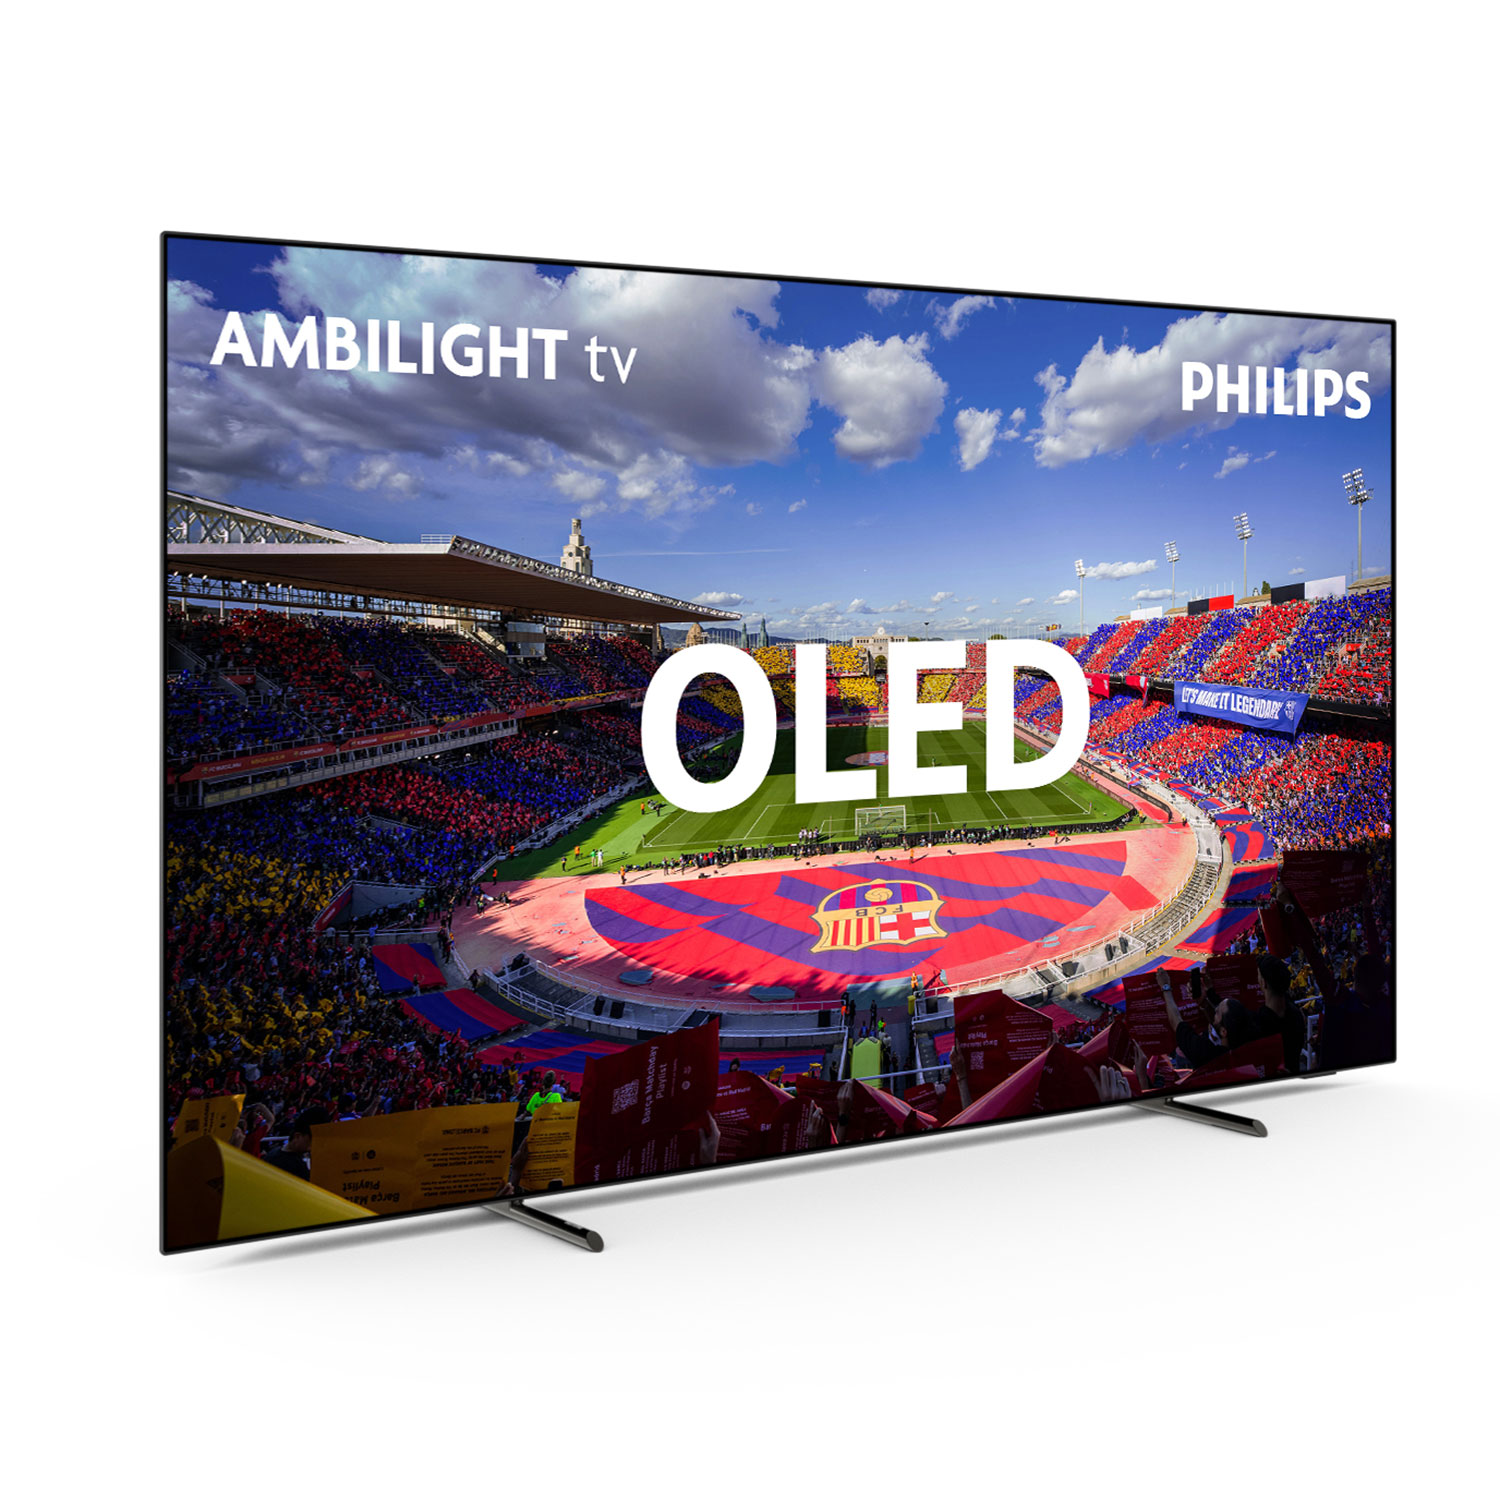 Philips Ambilight TV OLED708 55″ OLED-TV